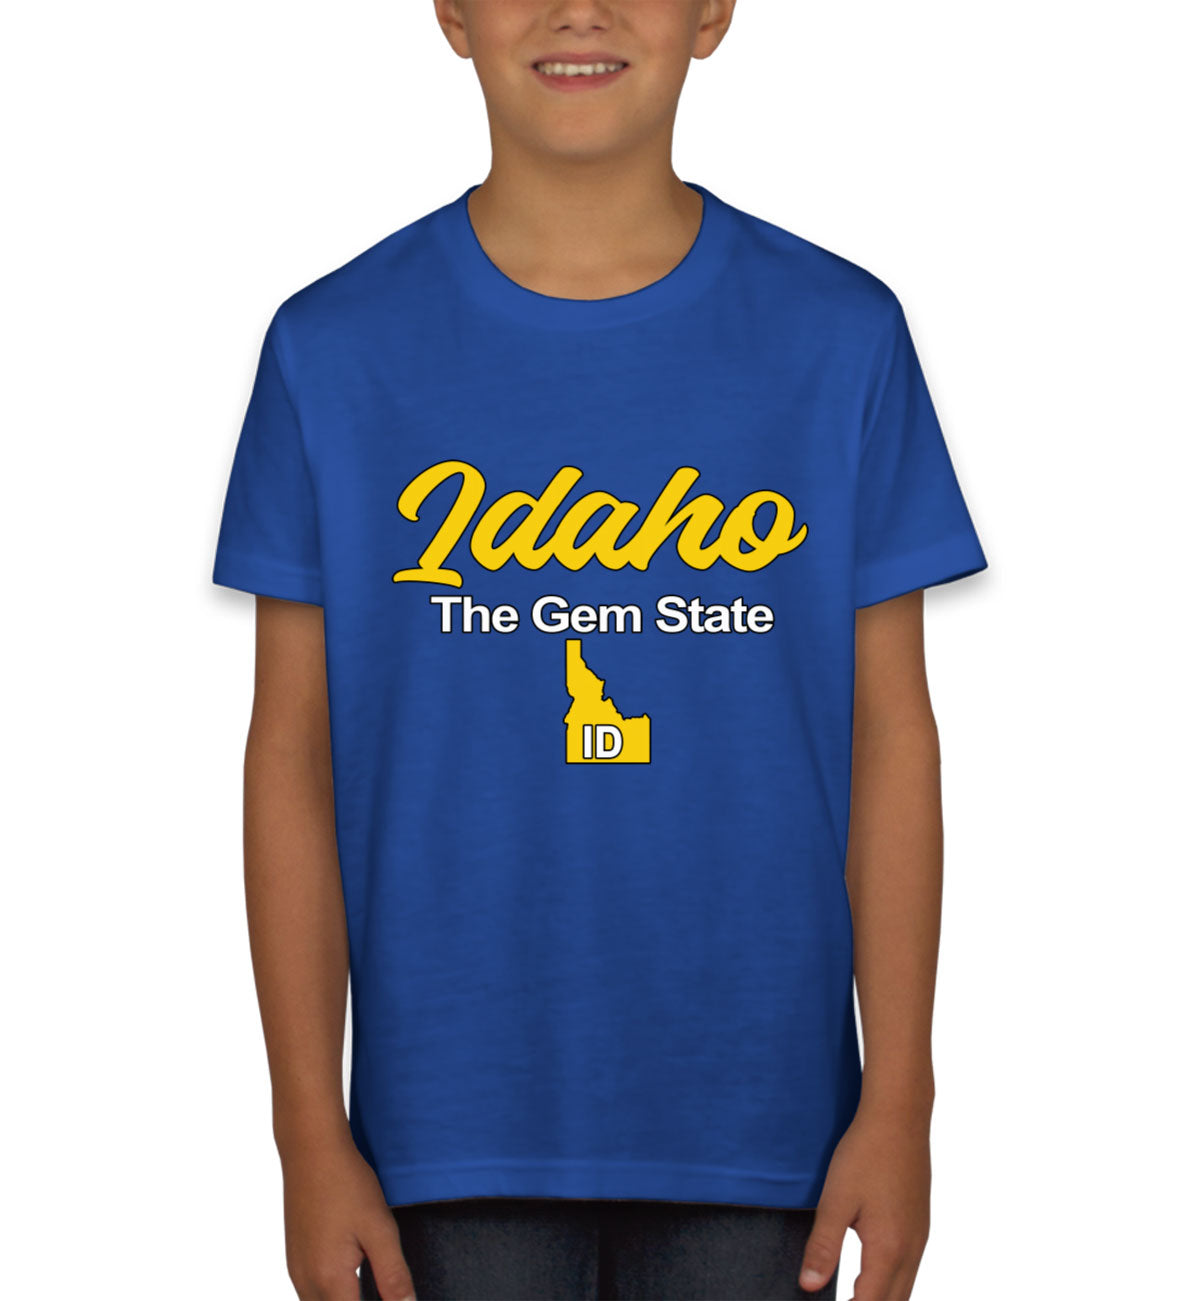 Idaho The Gem State Youth T-shirt